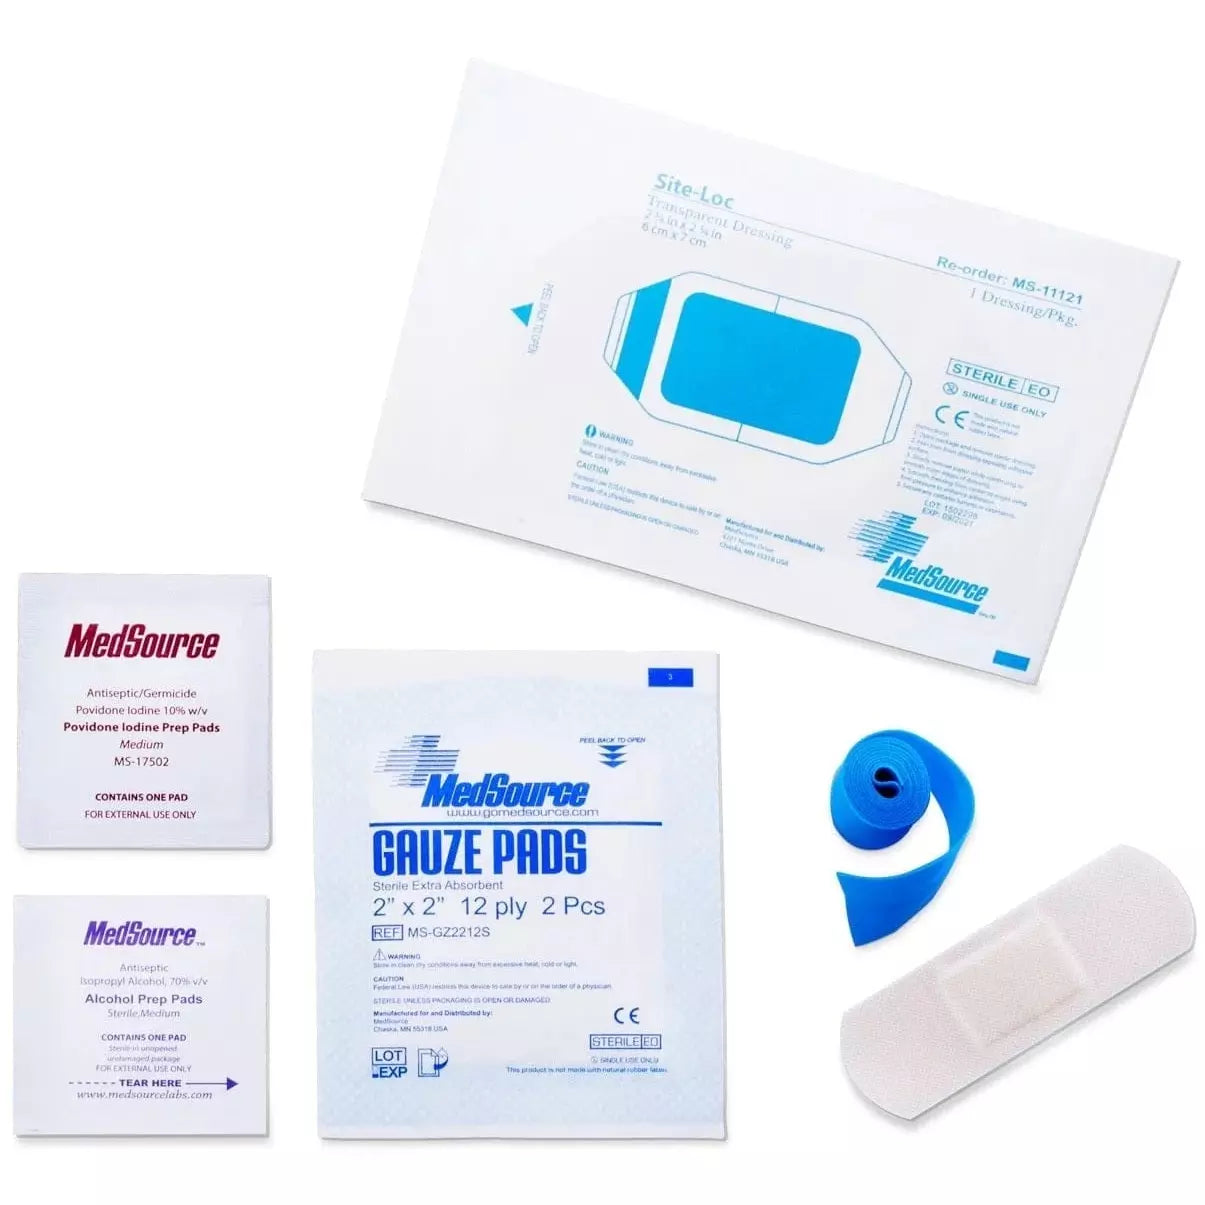 MS-80045 Kit Contents: • A MedSource Site-Loc Transparent Dressing • Alcohol Prep Pad • 2” x 2” Sterile Gauze Sponges • Povidone Iodine Prep Pad •1” x 3” Sterile Bandage • Latex Free Rolled Tourniquet